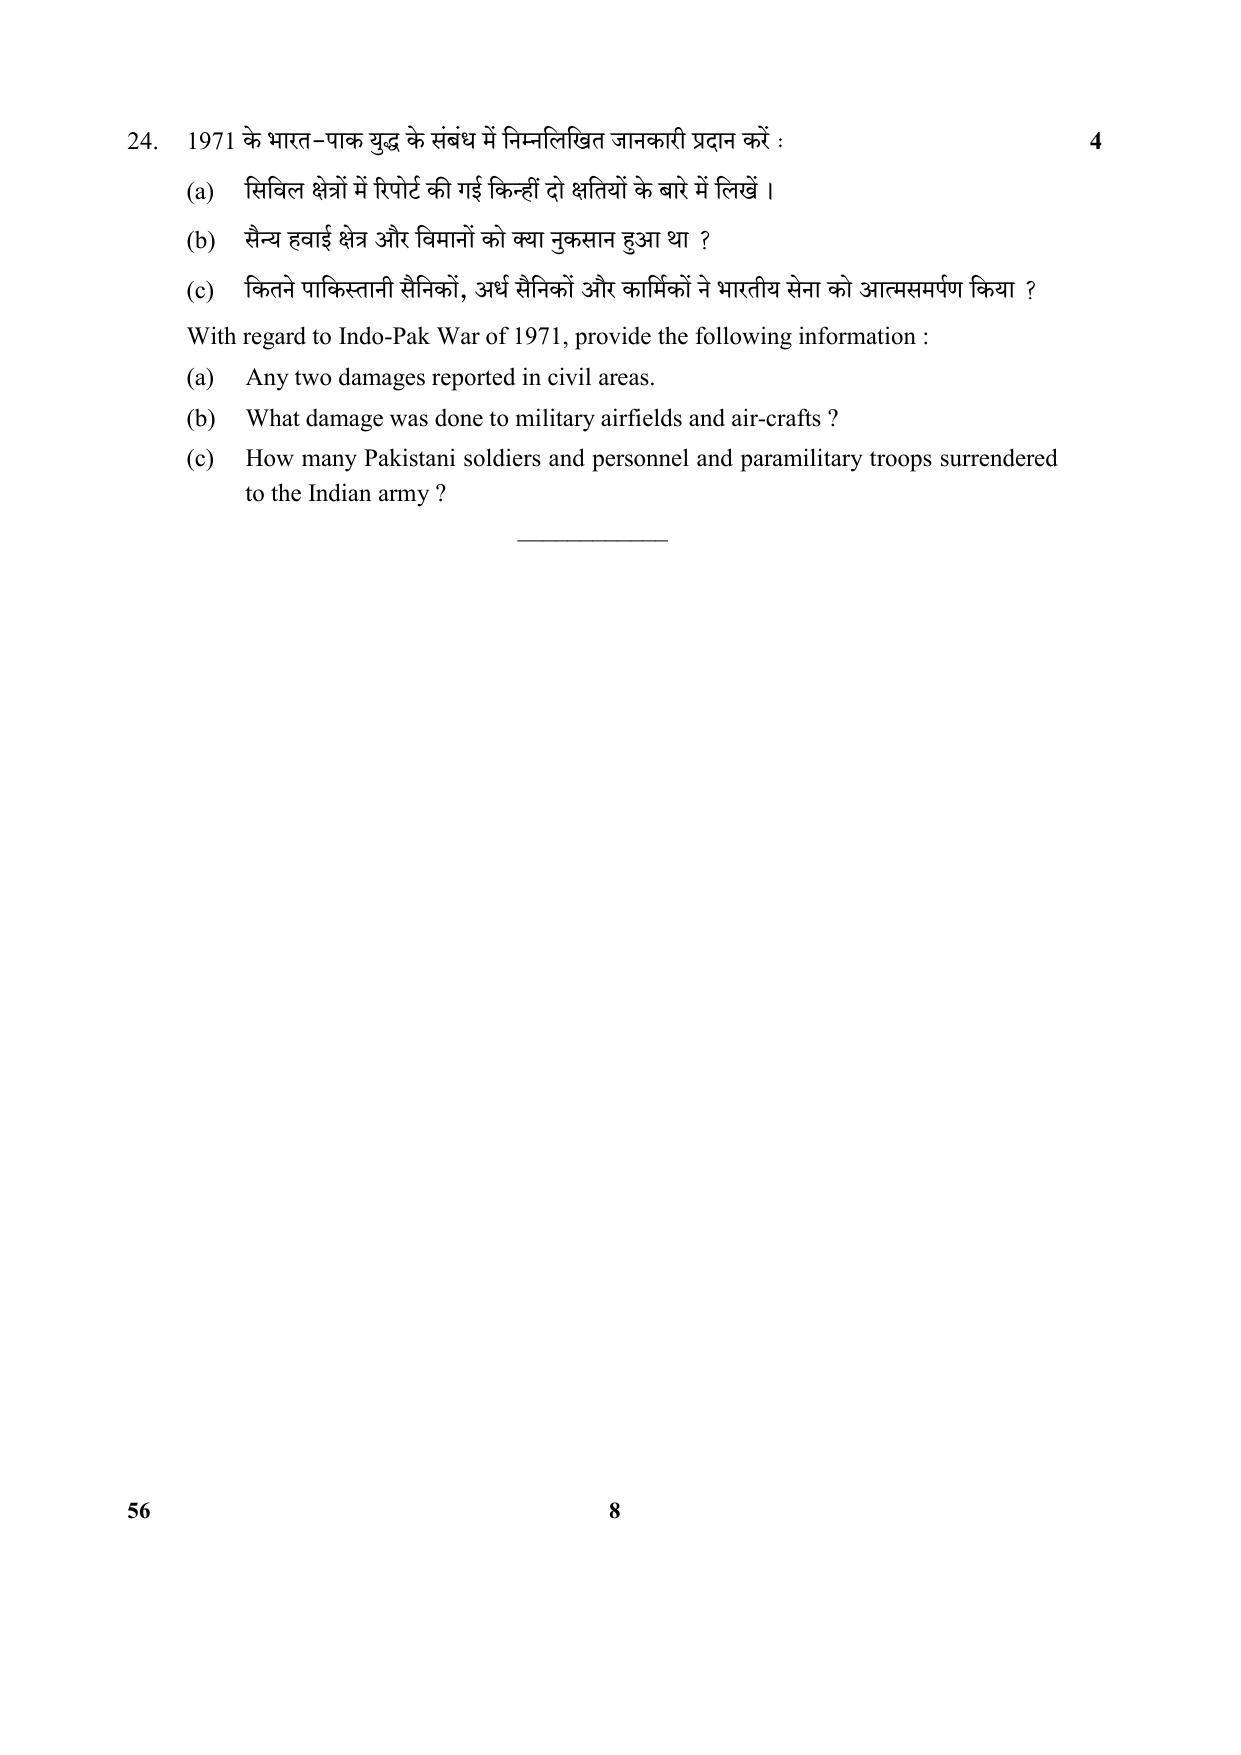 CBSE Class 10 56 (NCC) 2018 Question Paper - Page 8